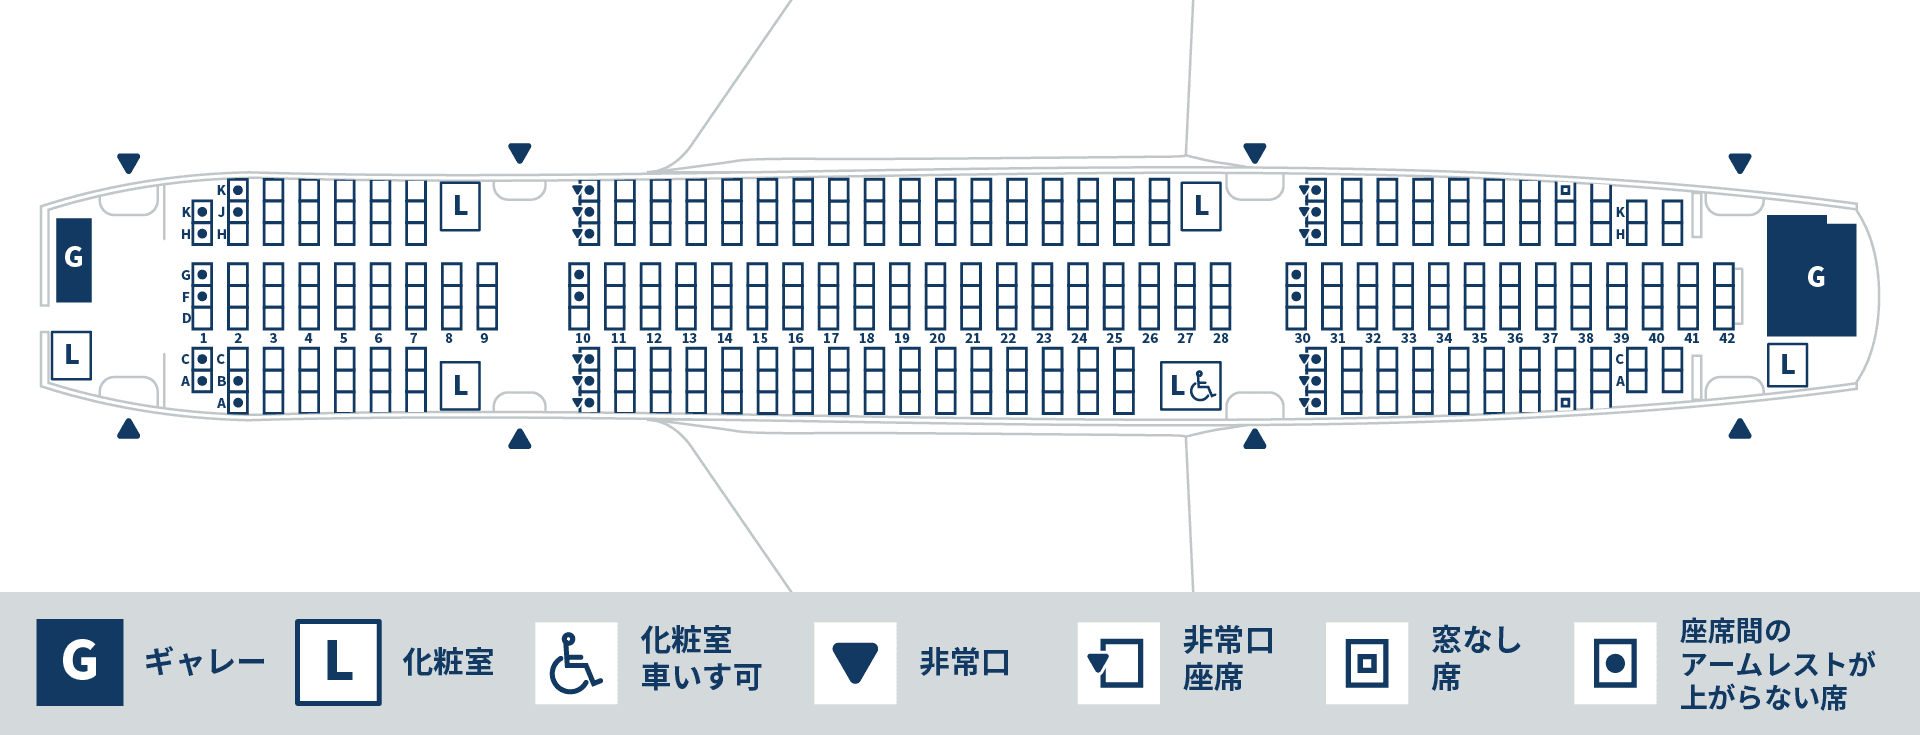 AirJapanで利用している航空機のシートマップです。